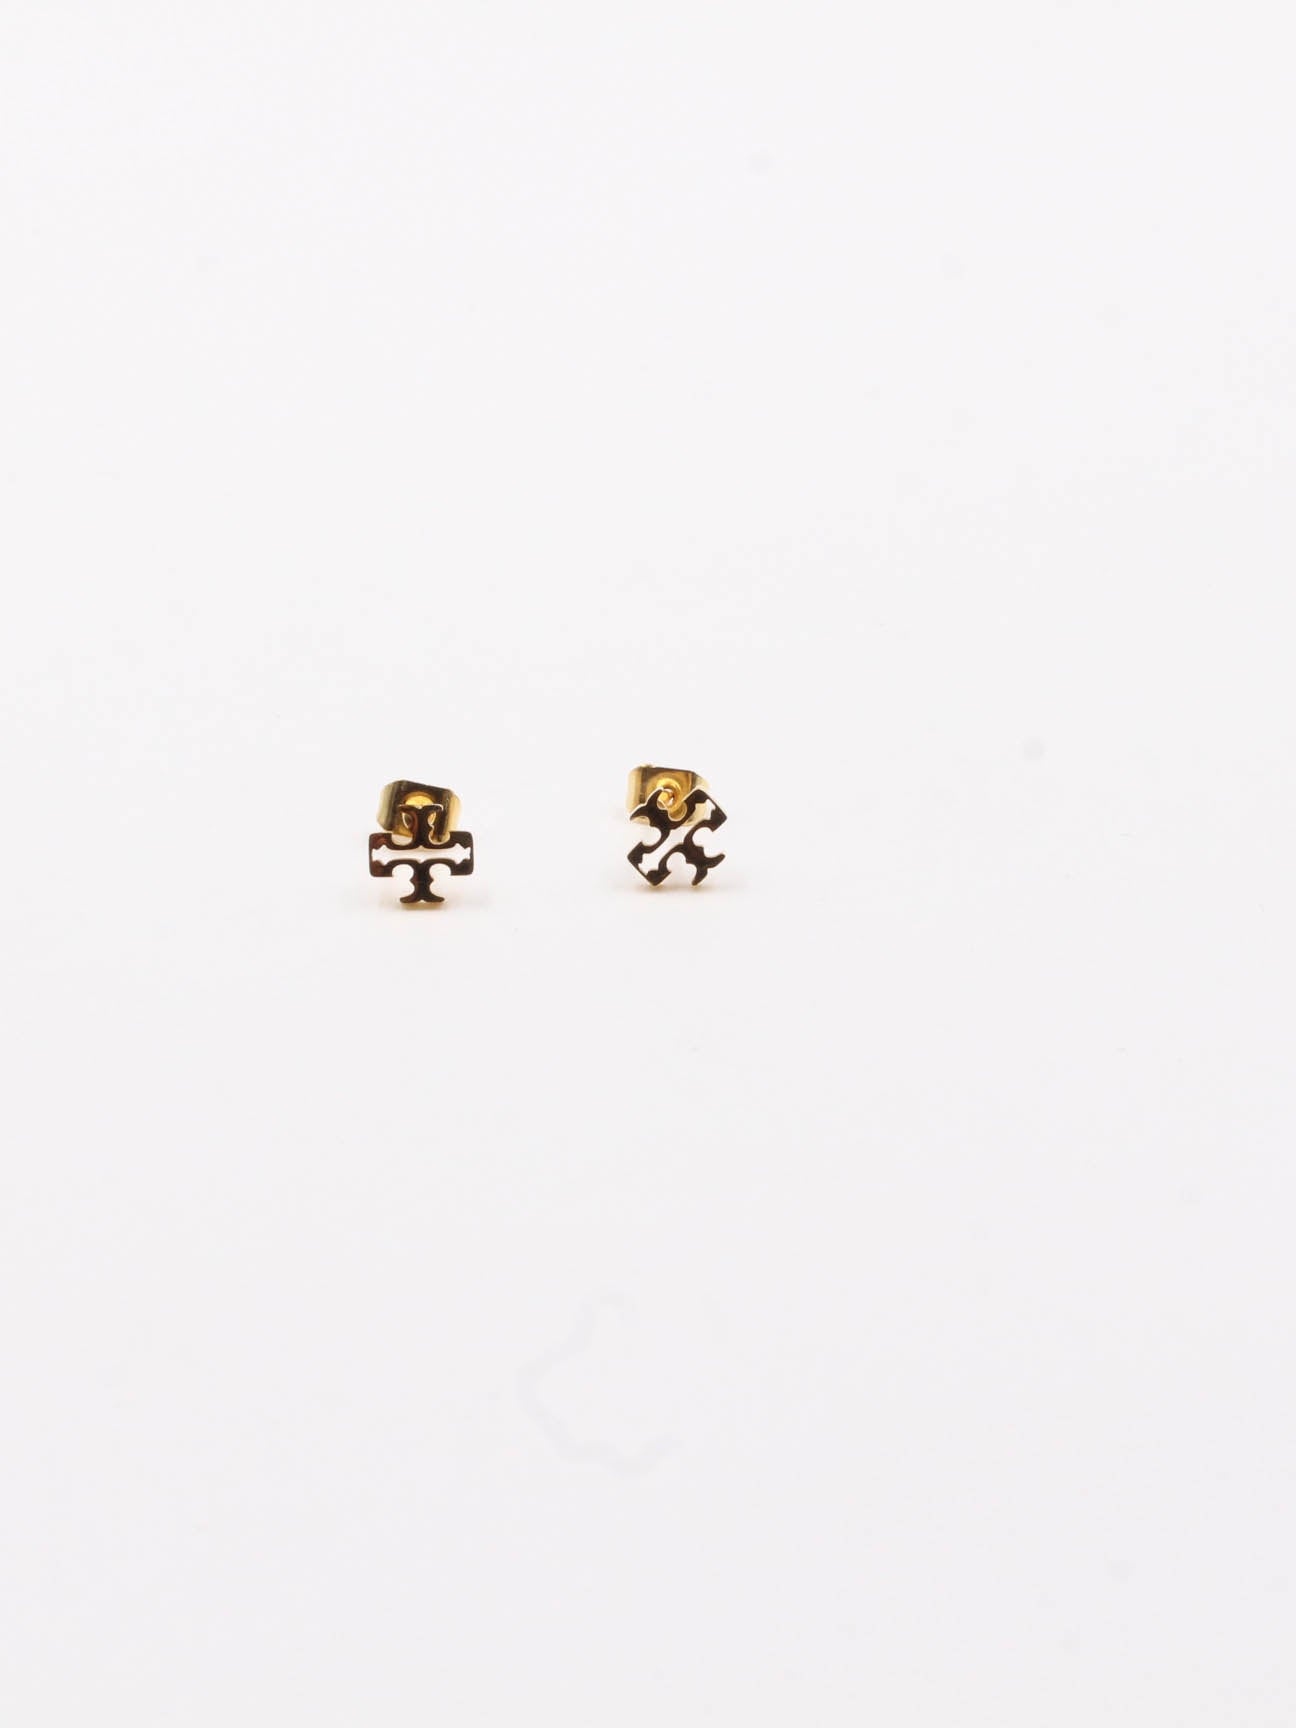 Small Tory Burch logo earring - حلق شعار توري بورش صغير مقاس 0.6mm حلق Jewel ذهبي  